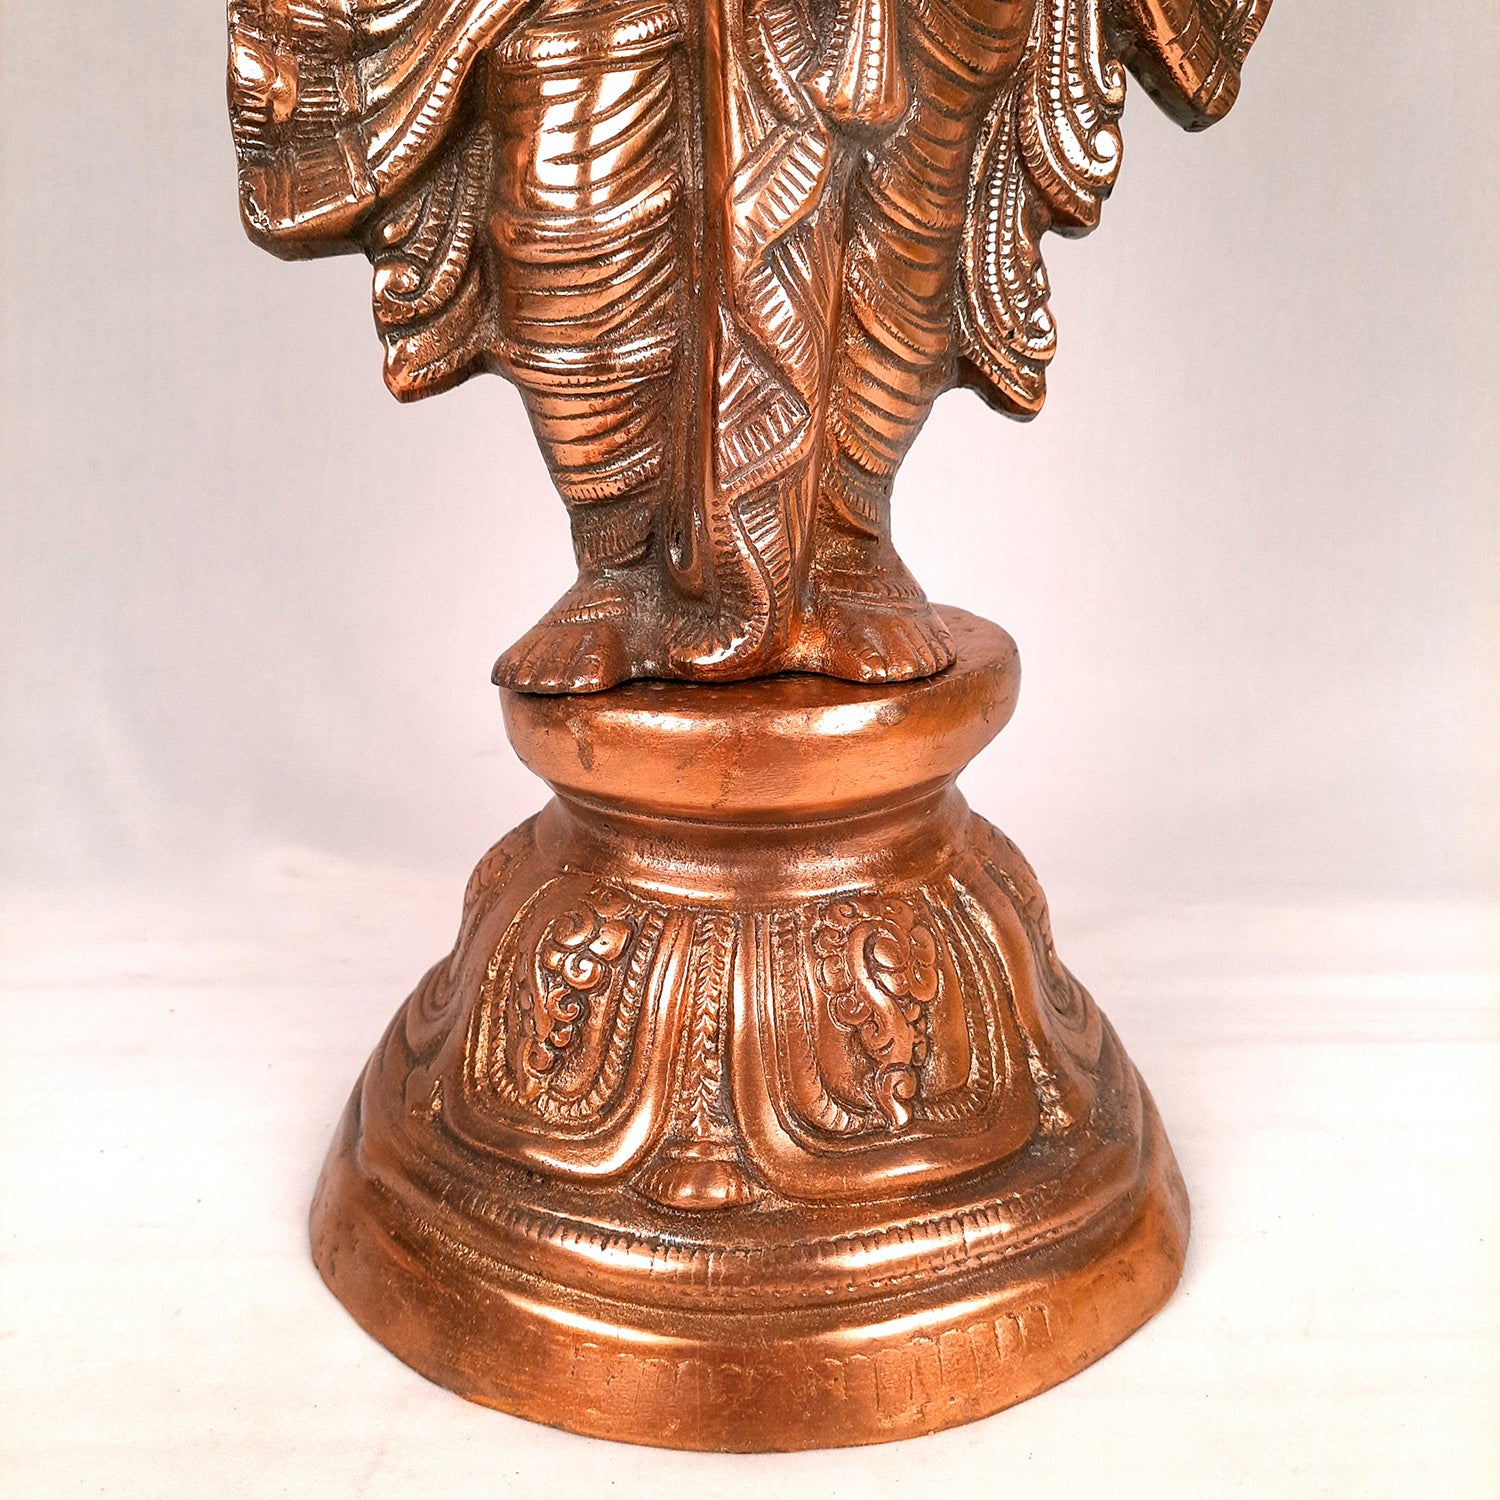 Shri Krishna Statue | Lord Krishna Idol Big | Religious & Spiritual Art Sculpture - for Gift, Home, Living Room, Office, Puja Room Decoration - 24 inch - Apkamart